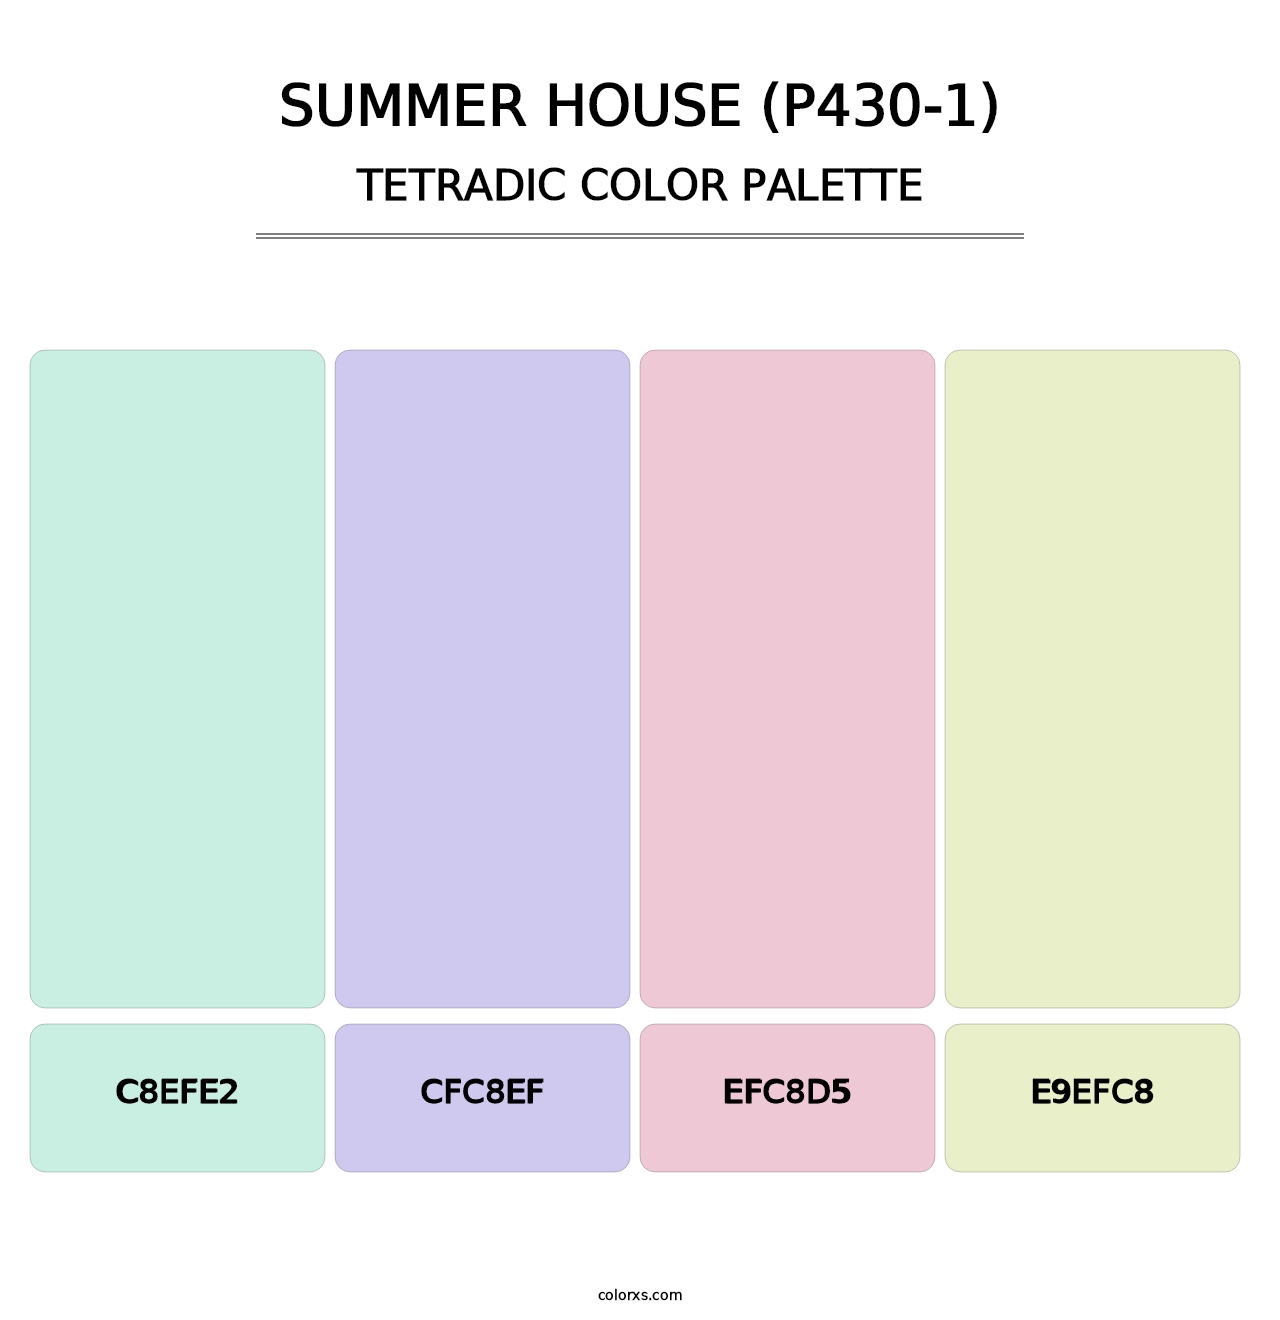 Summer House (P430-1) - Tetradic Color Palette